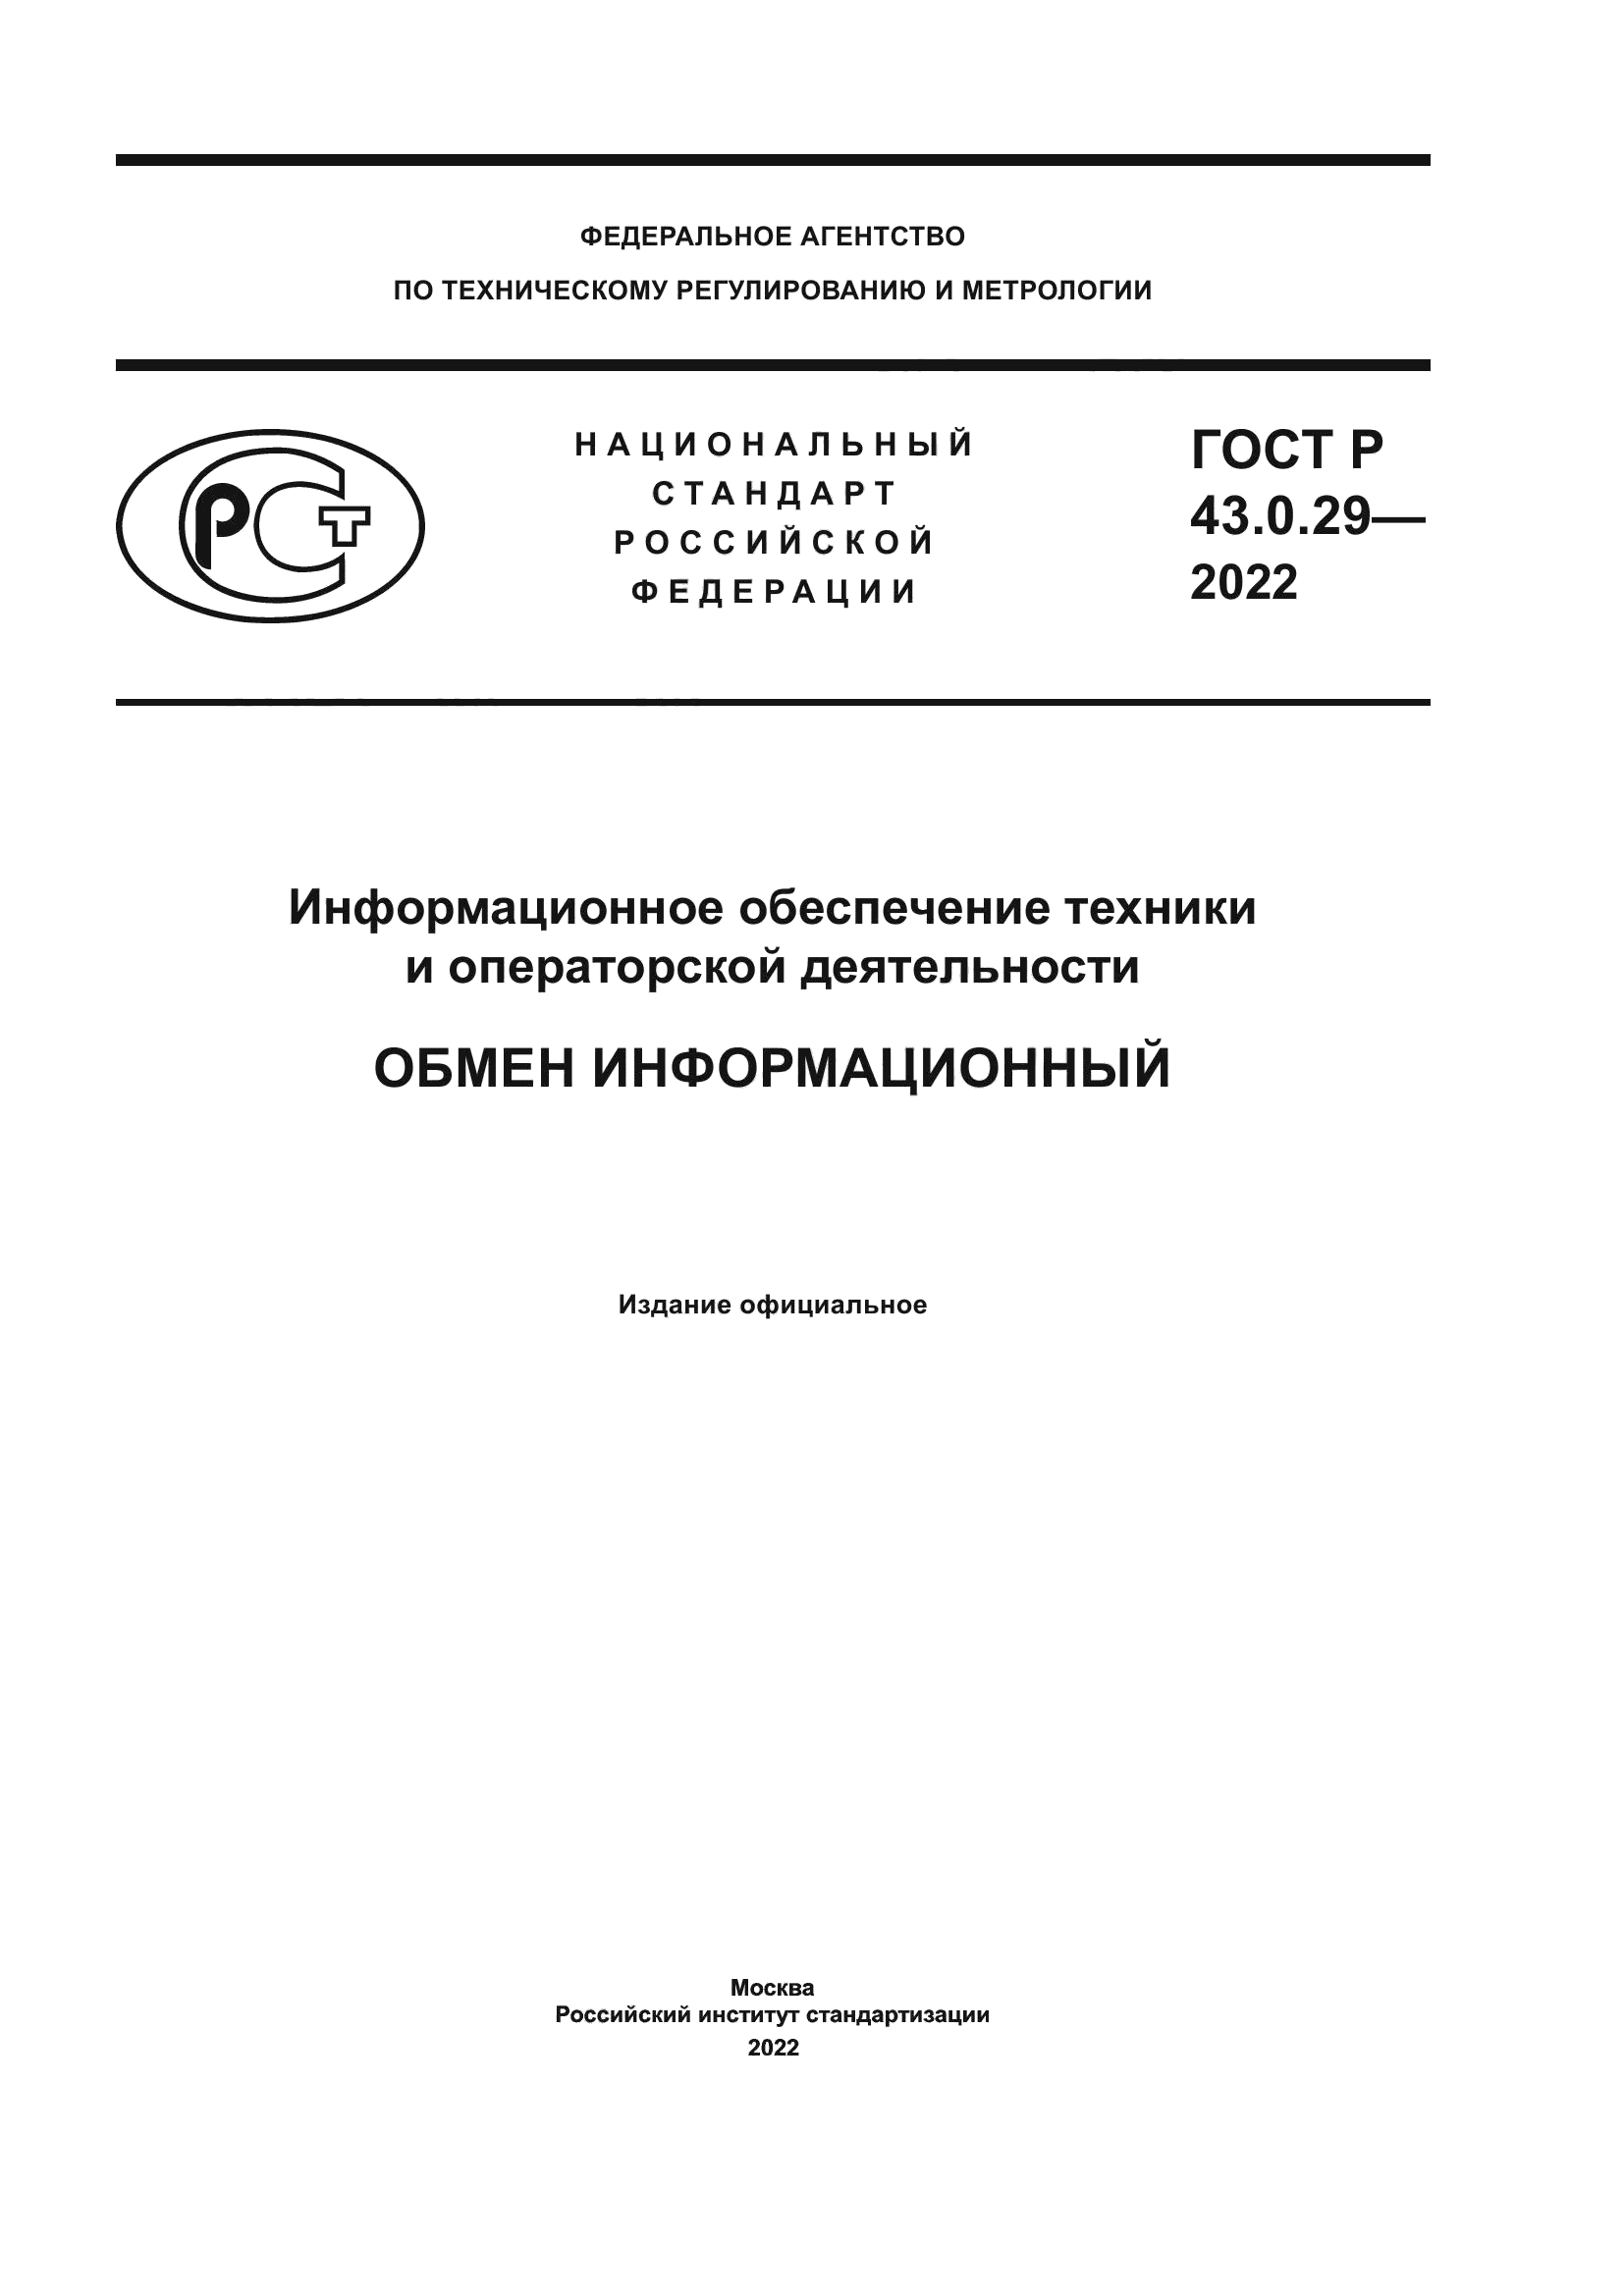 ГОСТ Р 43.0.29-2022